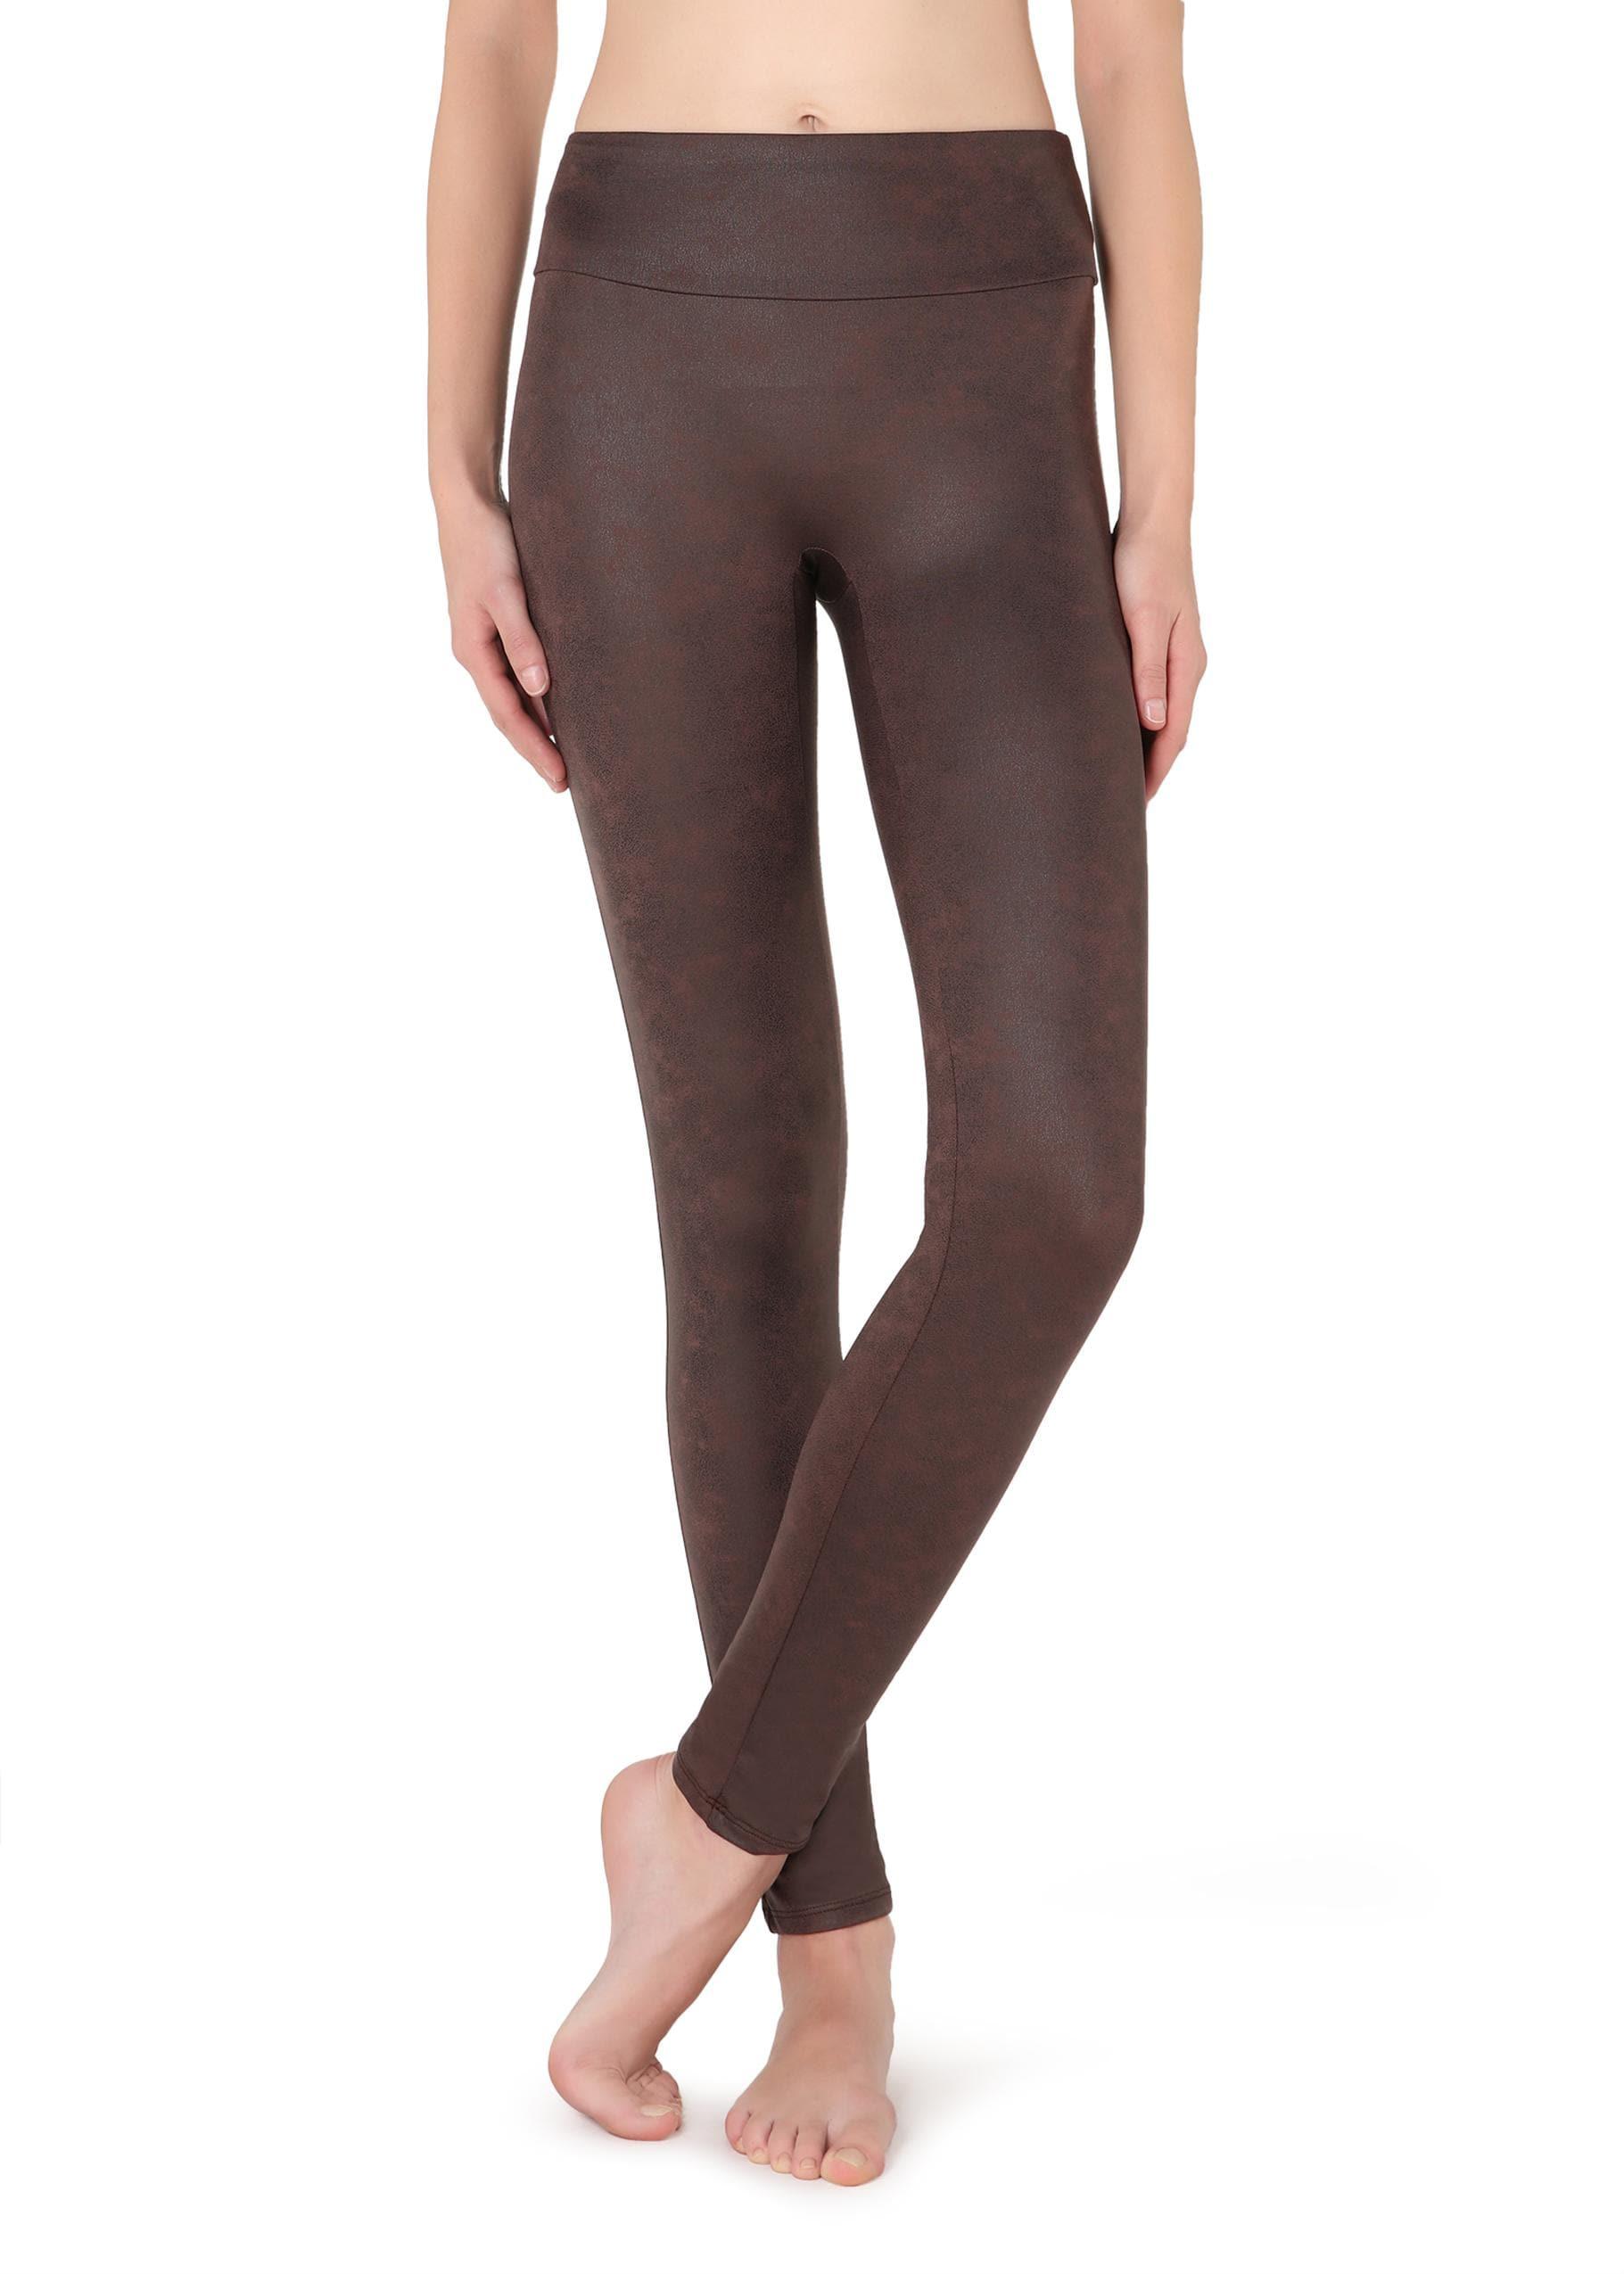 https://cdna.lystit.com/photos/calzedonia/0499c0f9/calzedonia-Brown-Total-Shaper-Thermal-Leather-Effect-leggings.jpeg